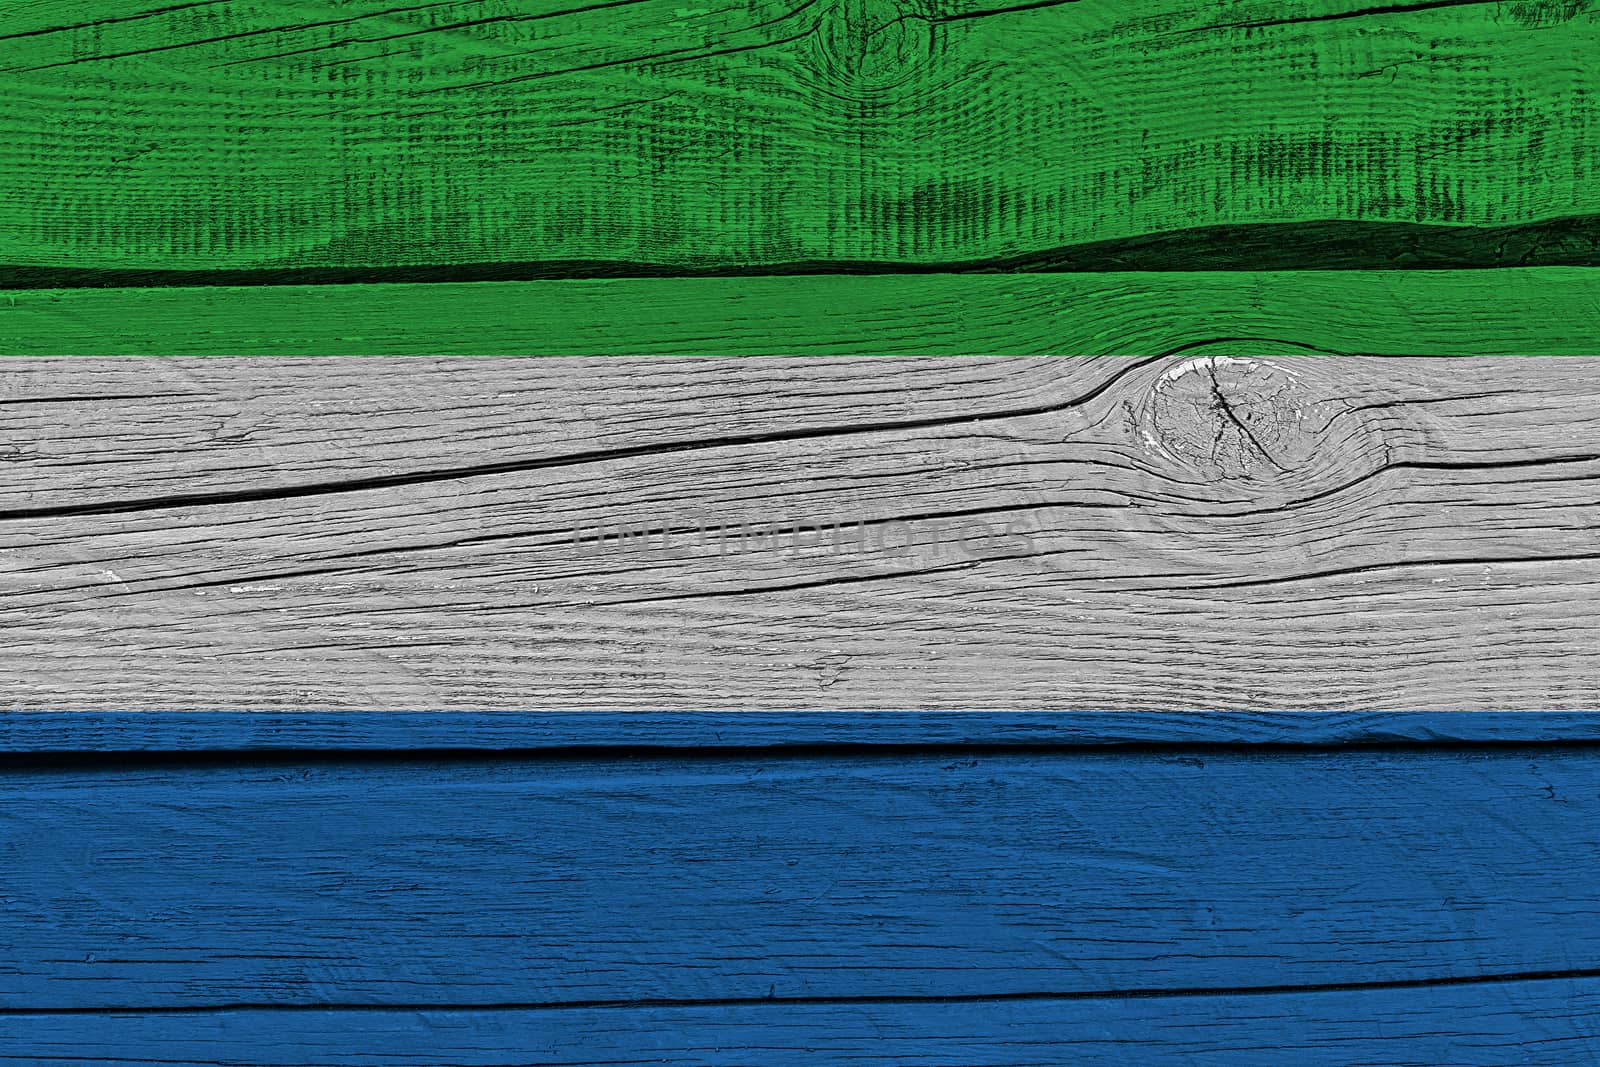 Sierra leone flag painted on old wood plank. Patriotic background. National flag of Sierra leone